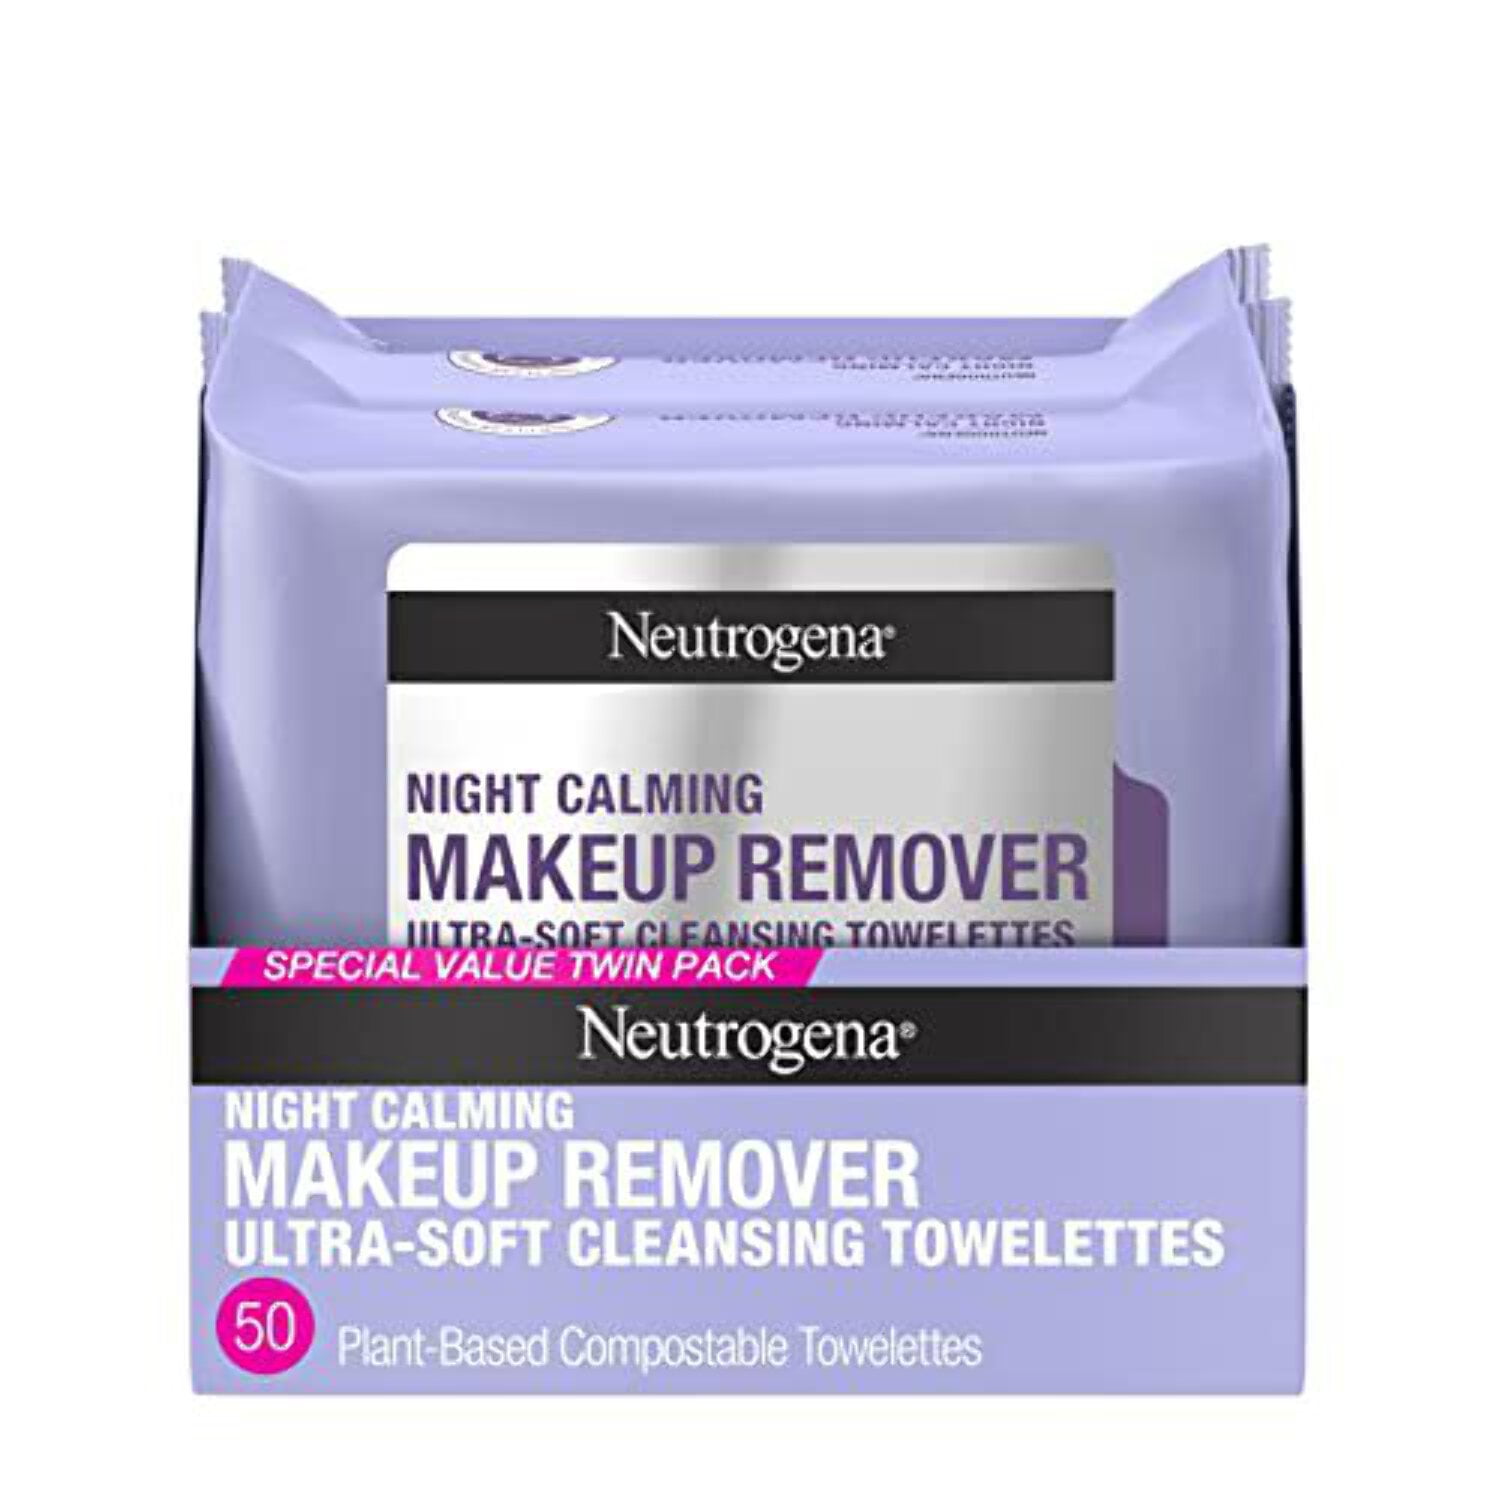 Neutrogena Makeup Remover Night Calming